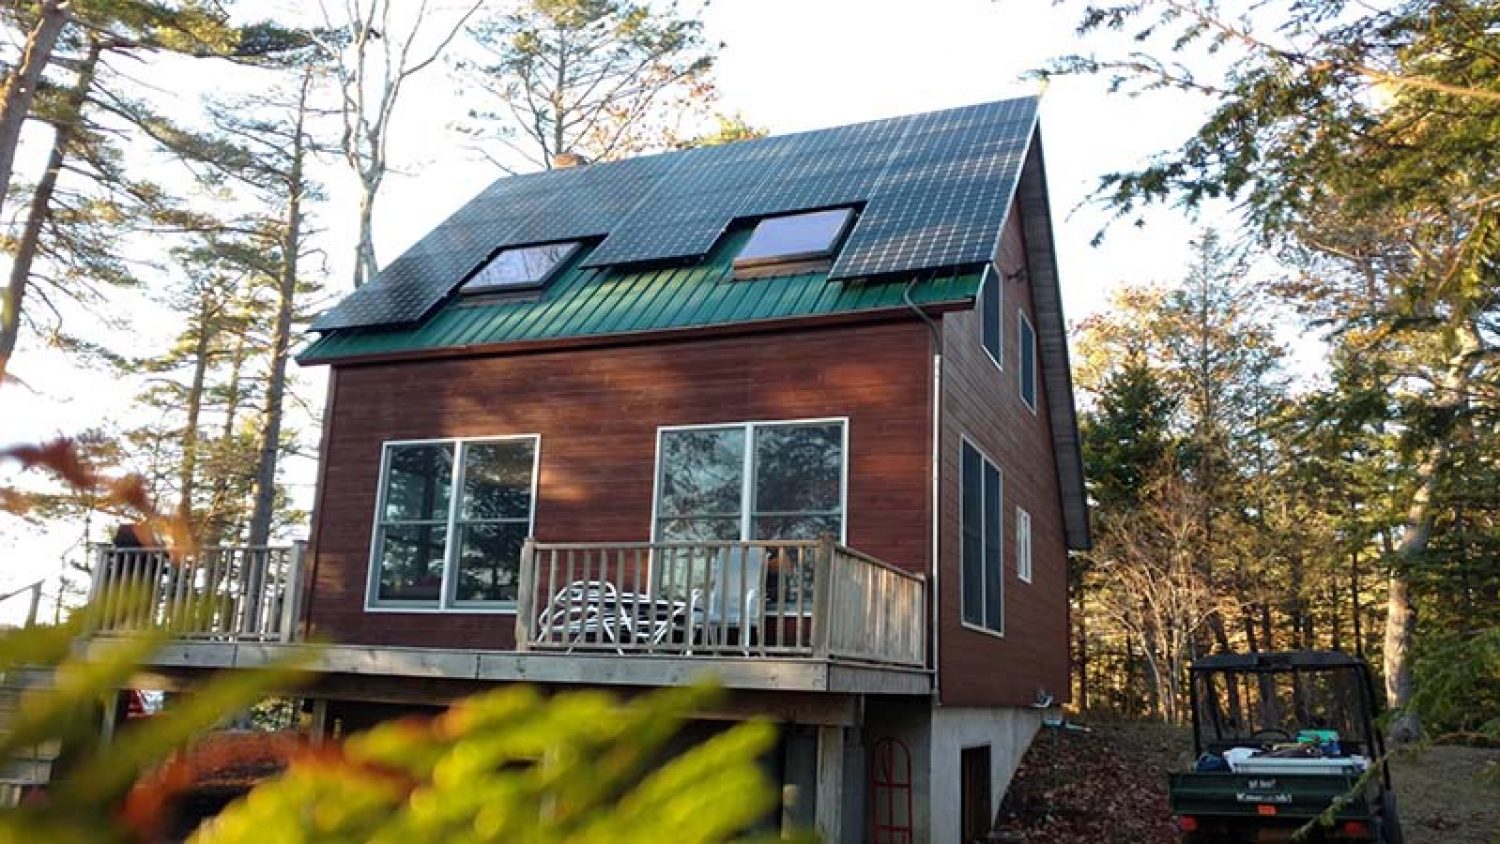 Assured Solar Energy 460 Mountfort Rd, North Yarmouth Maine 04097